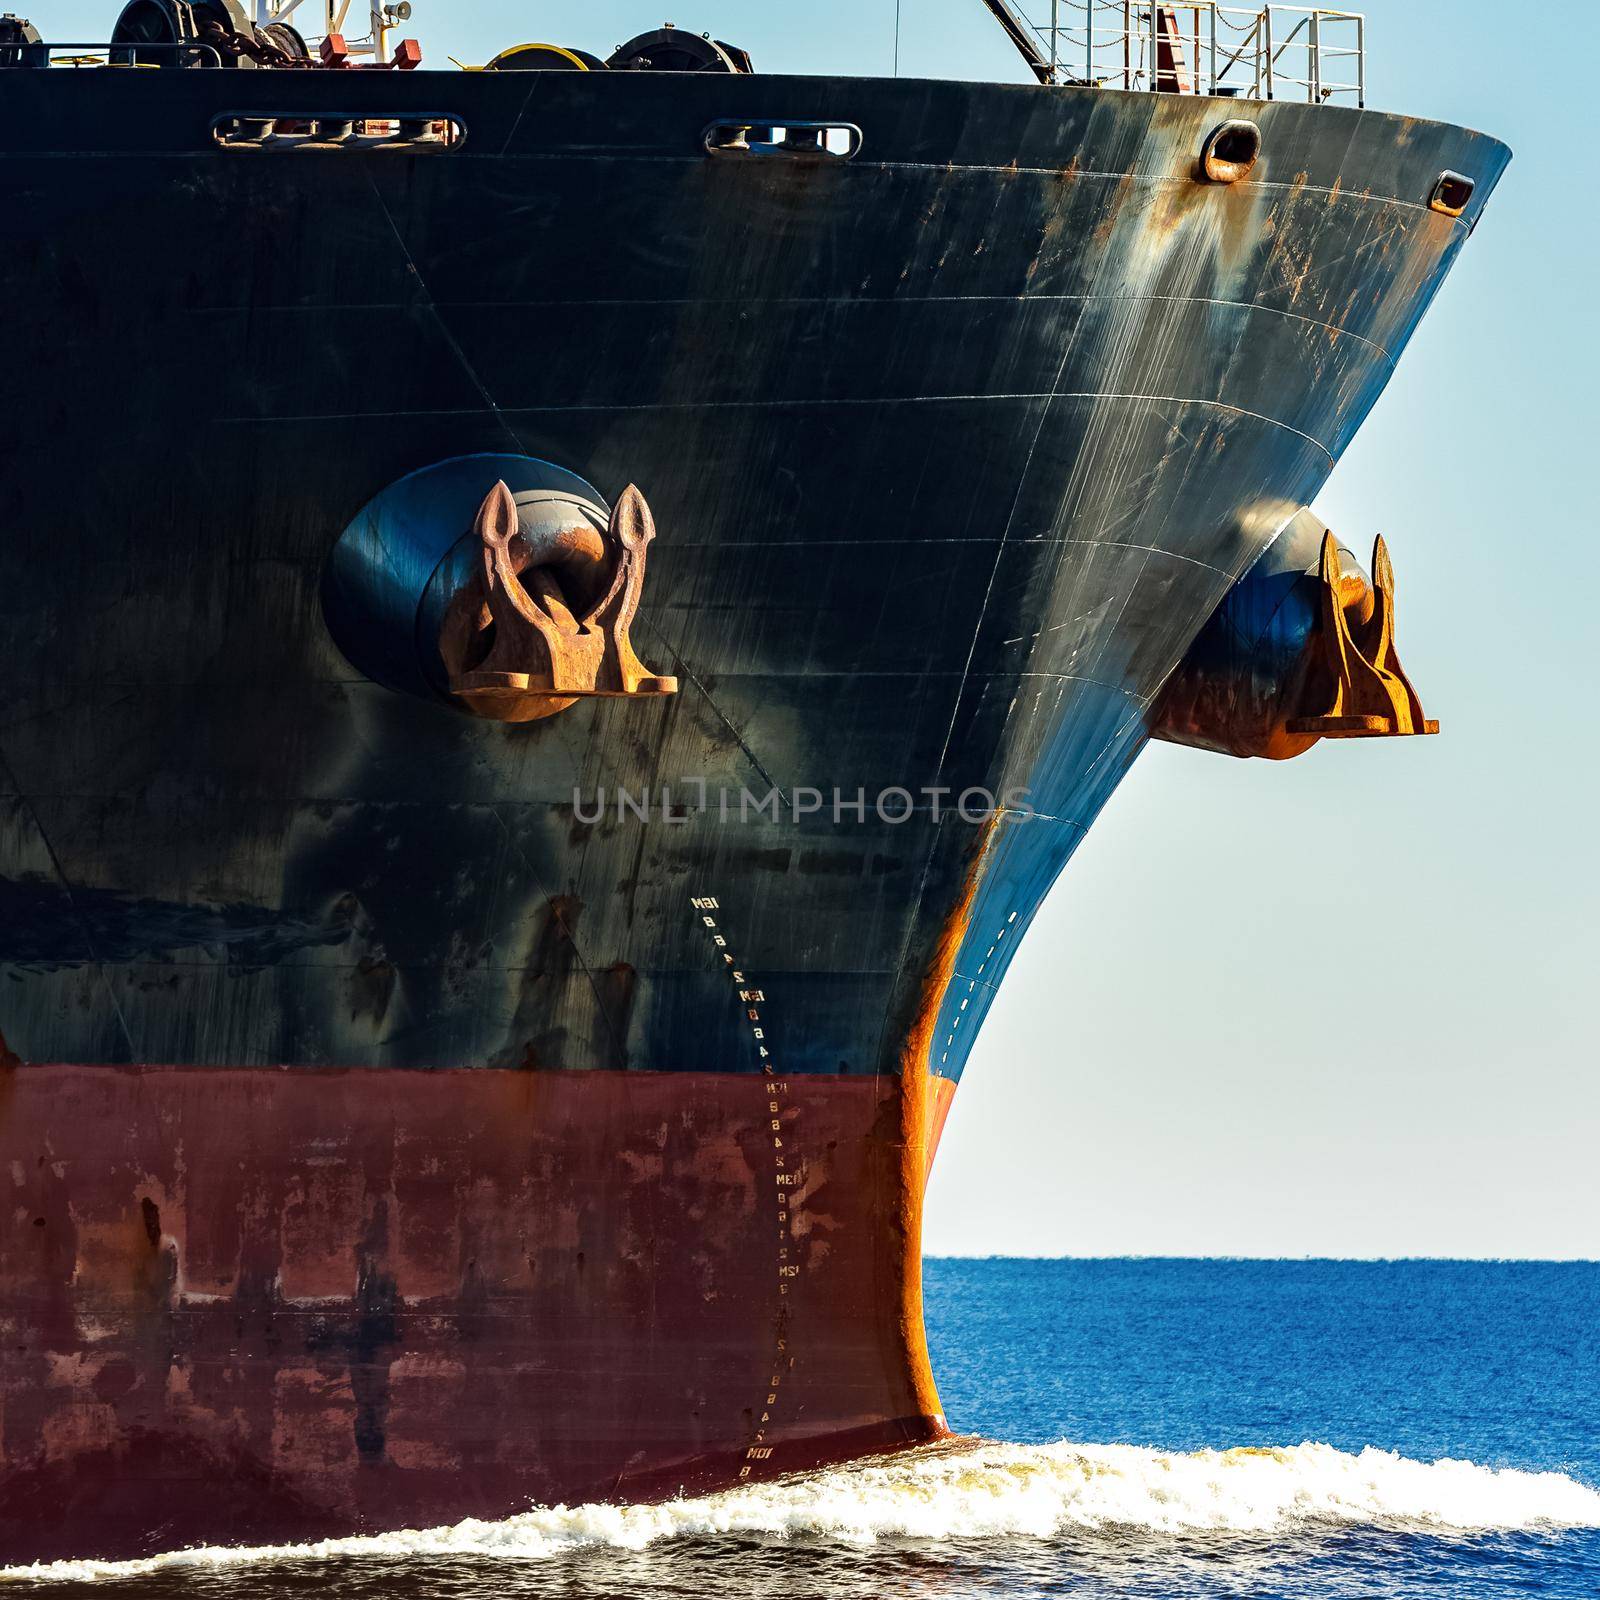 Black cargo ship's bow in still water. Riga, Europe